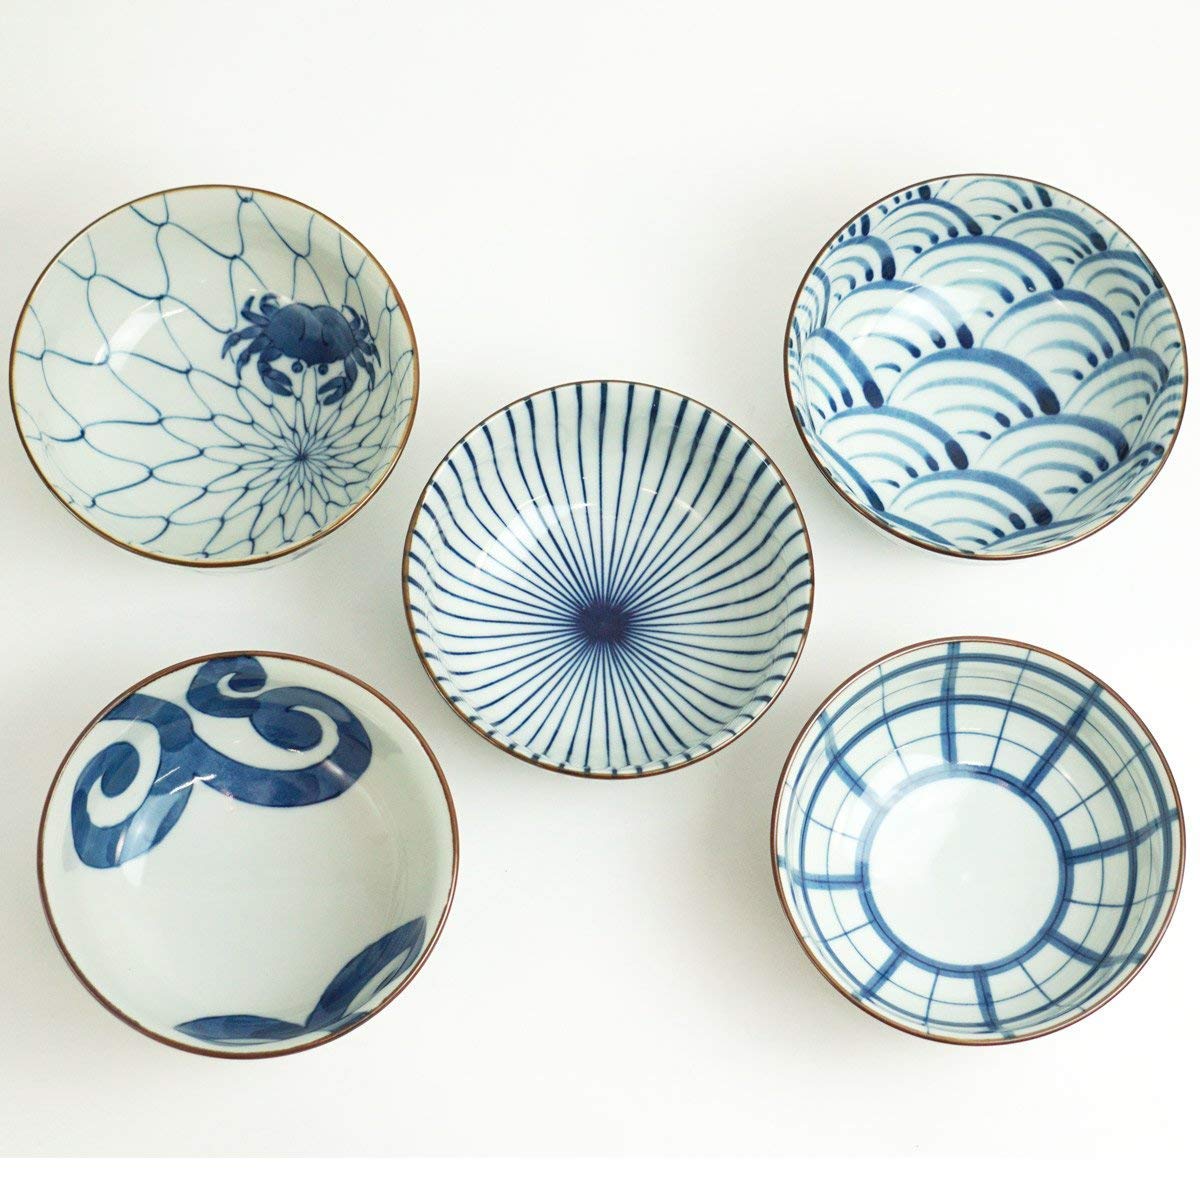 Saikai Pottery Traiditional Japanese Blue And White patterns Japanease Rice Bowls (5 bowls set) 31043 from Japan